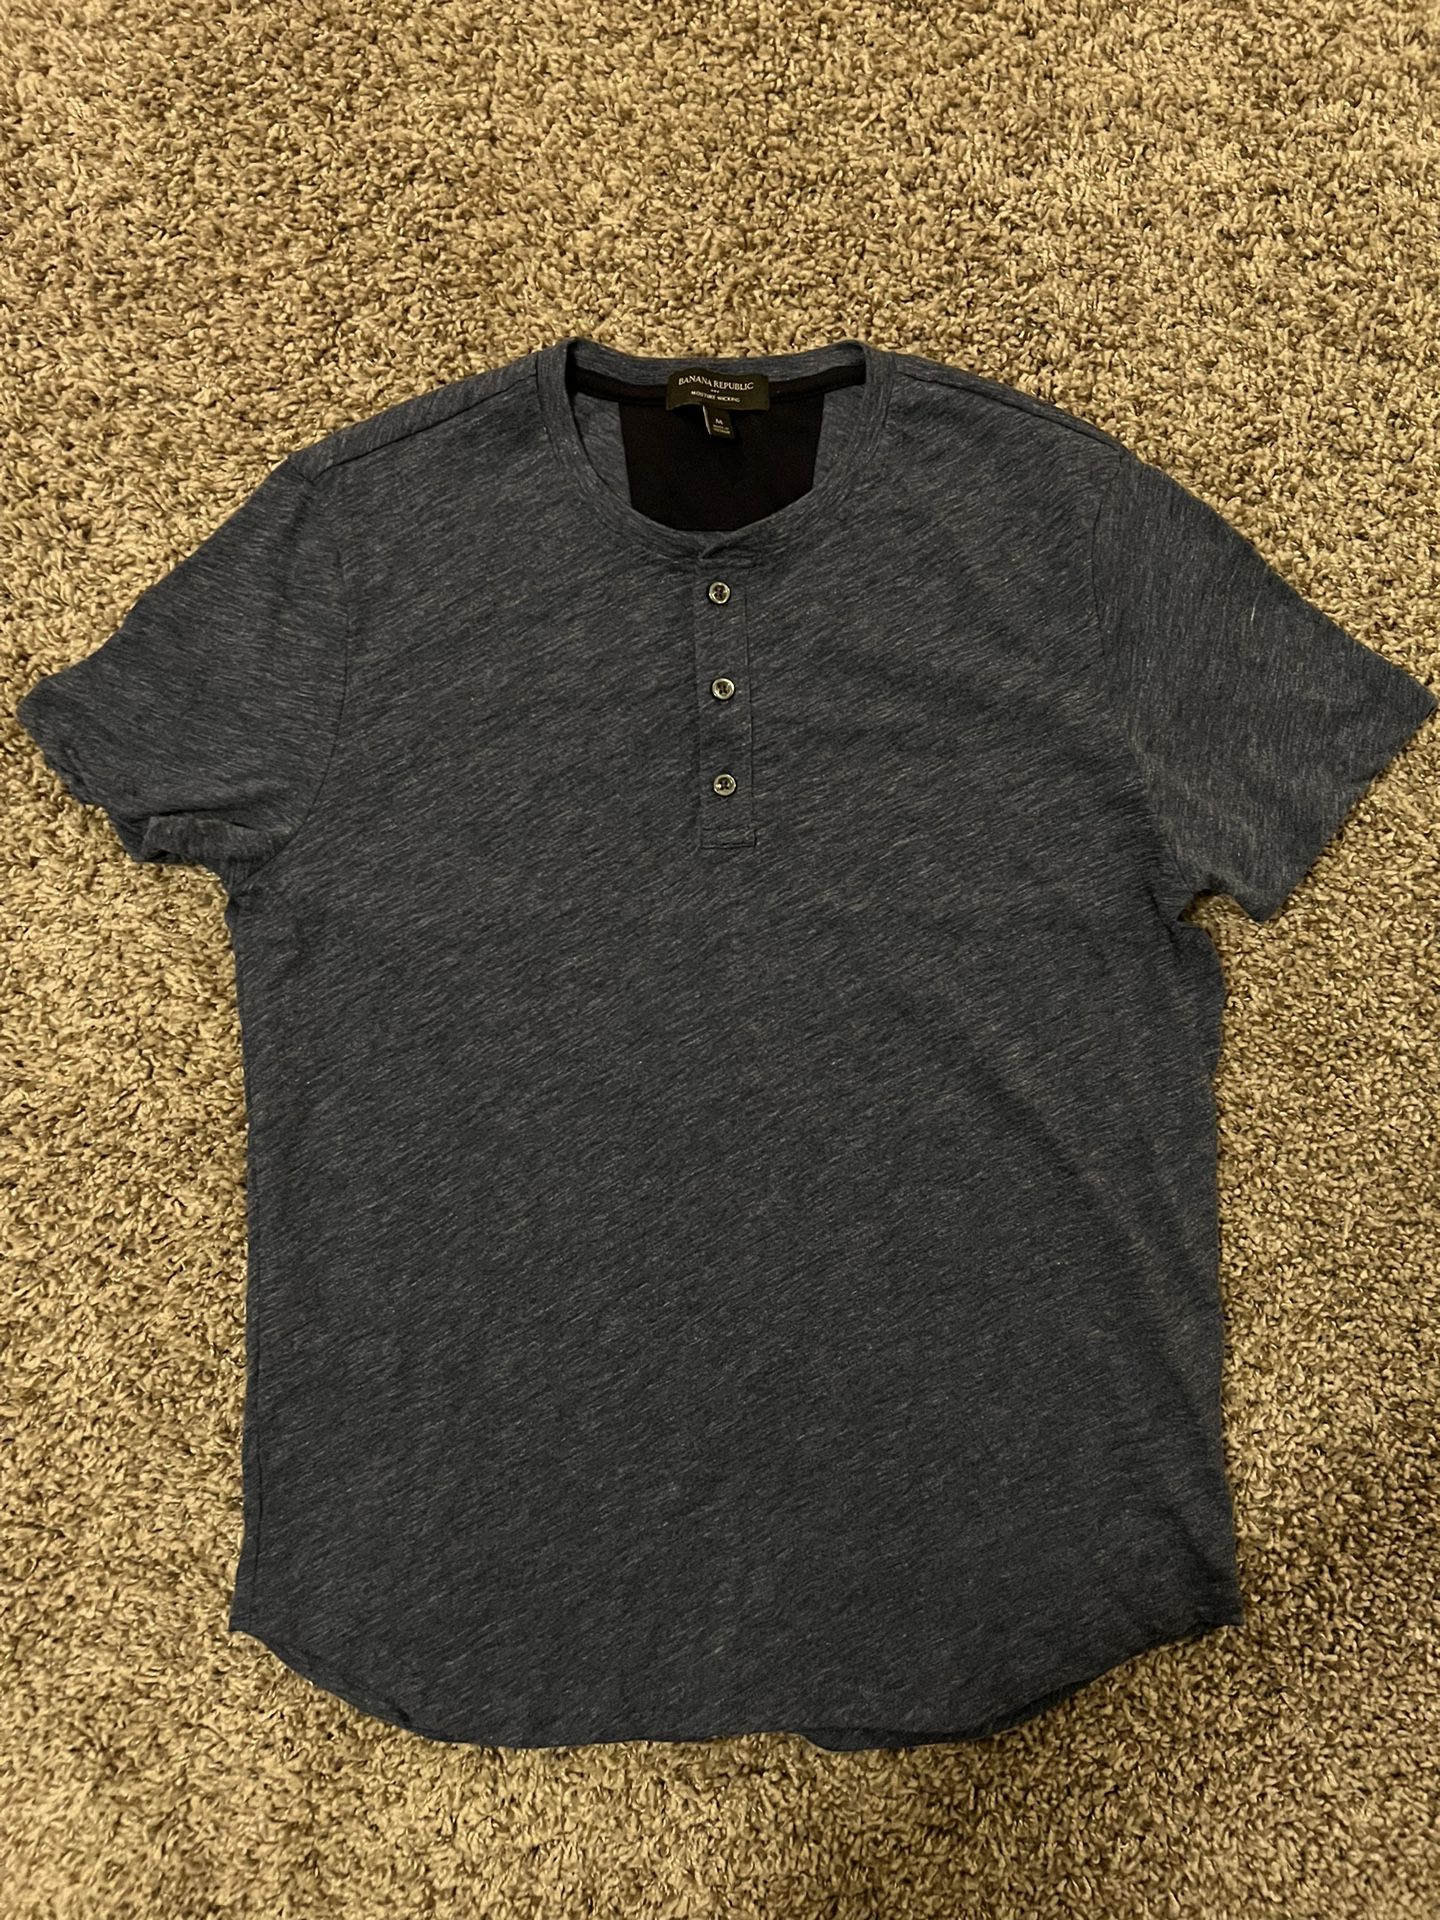 Banana Republic Men’s Medium Blue Button T-Shirt